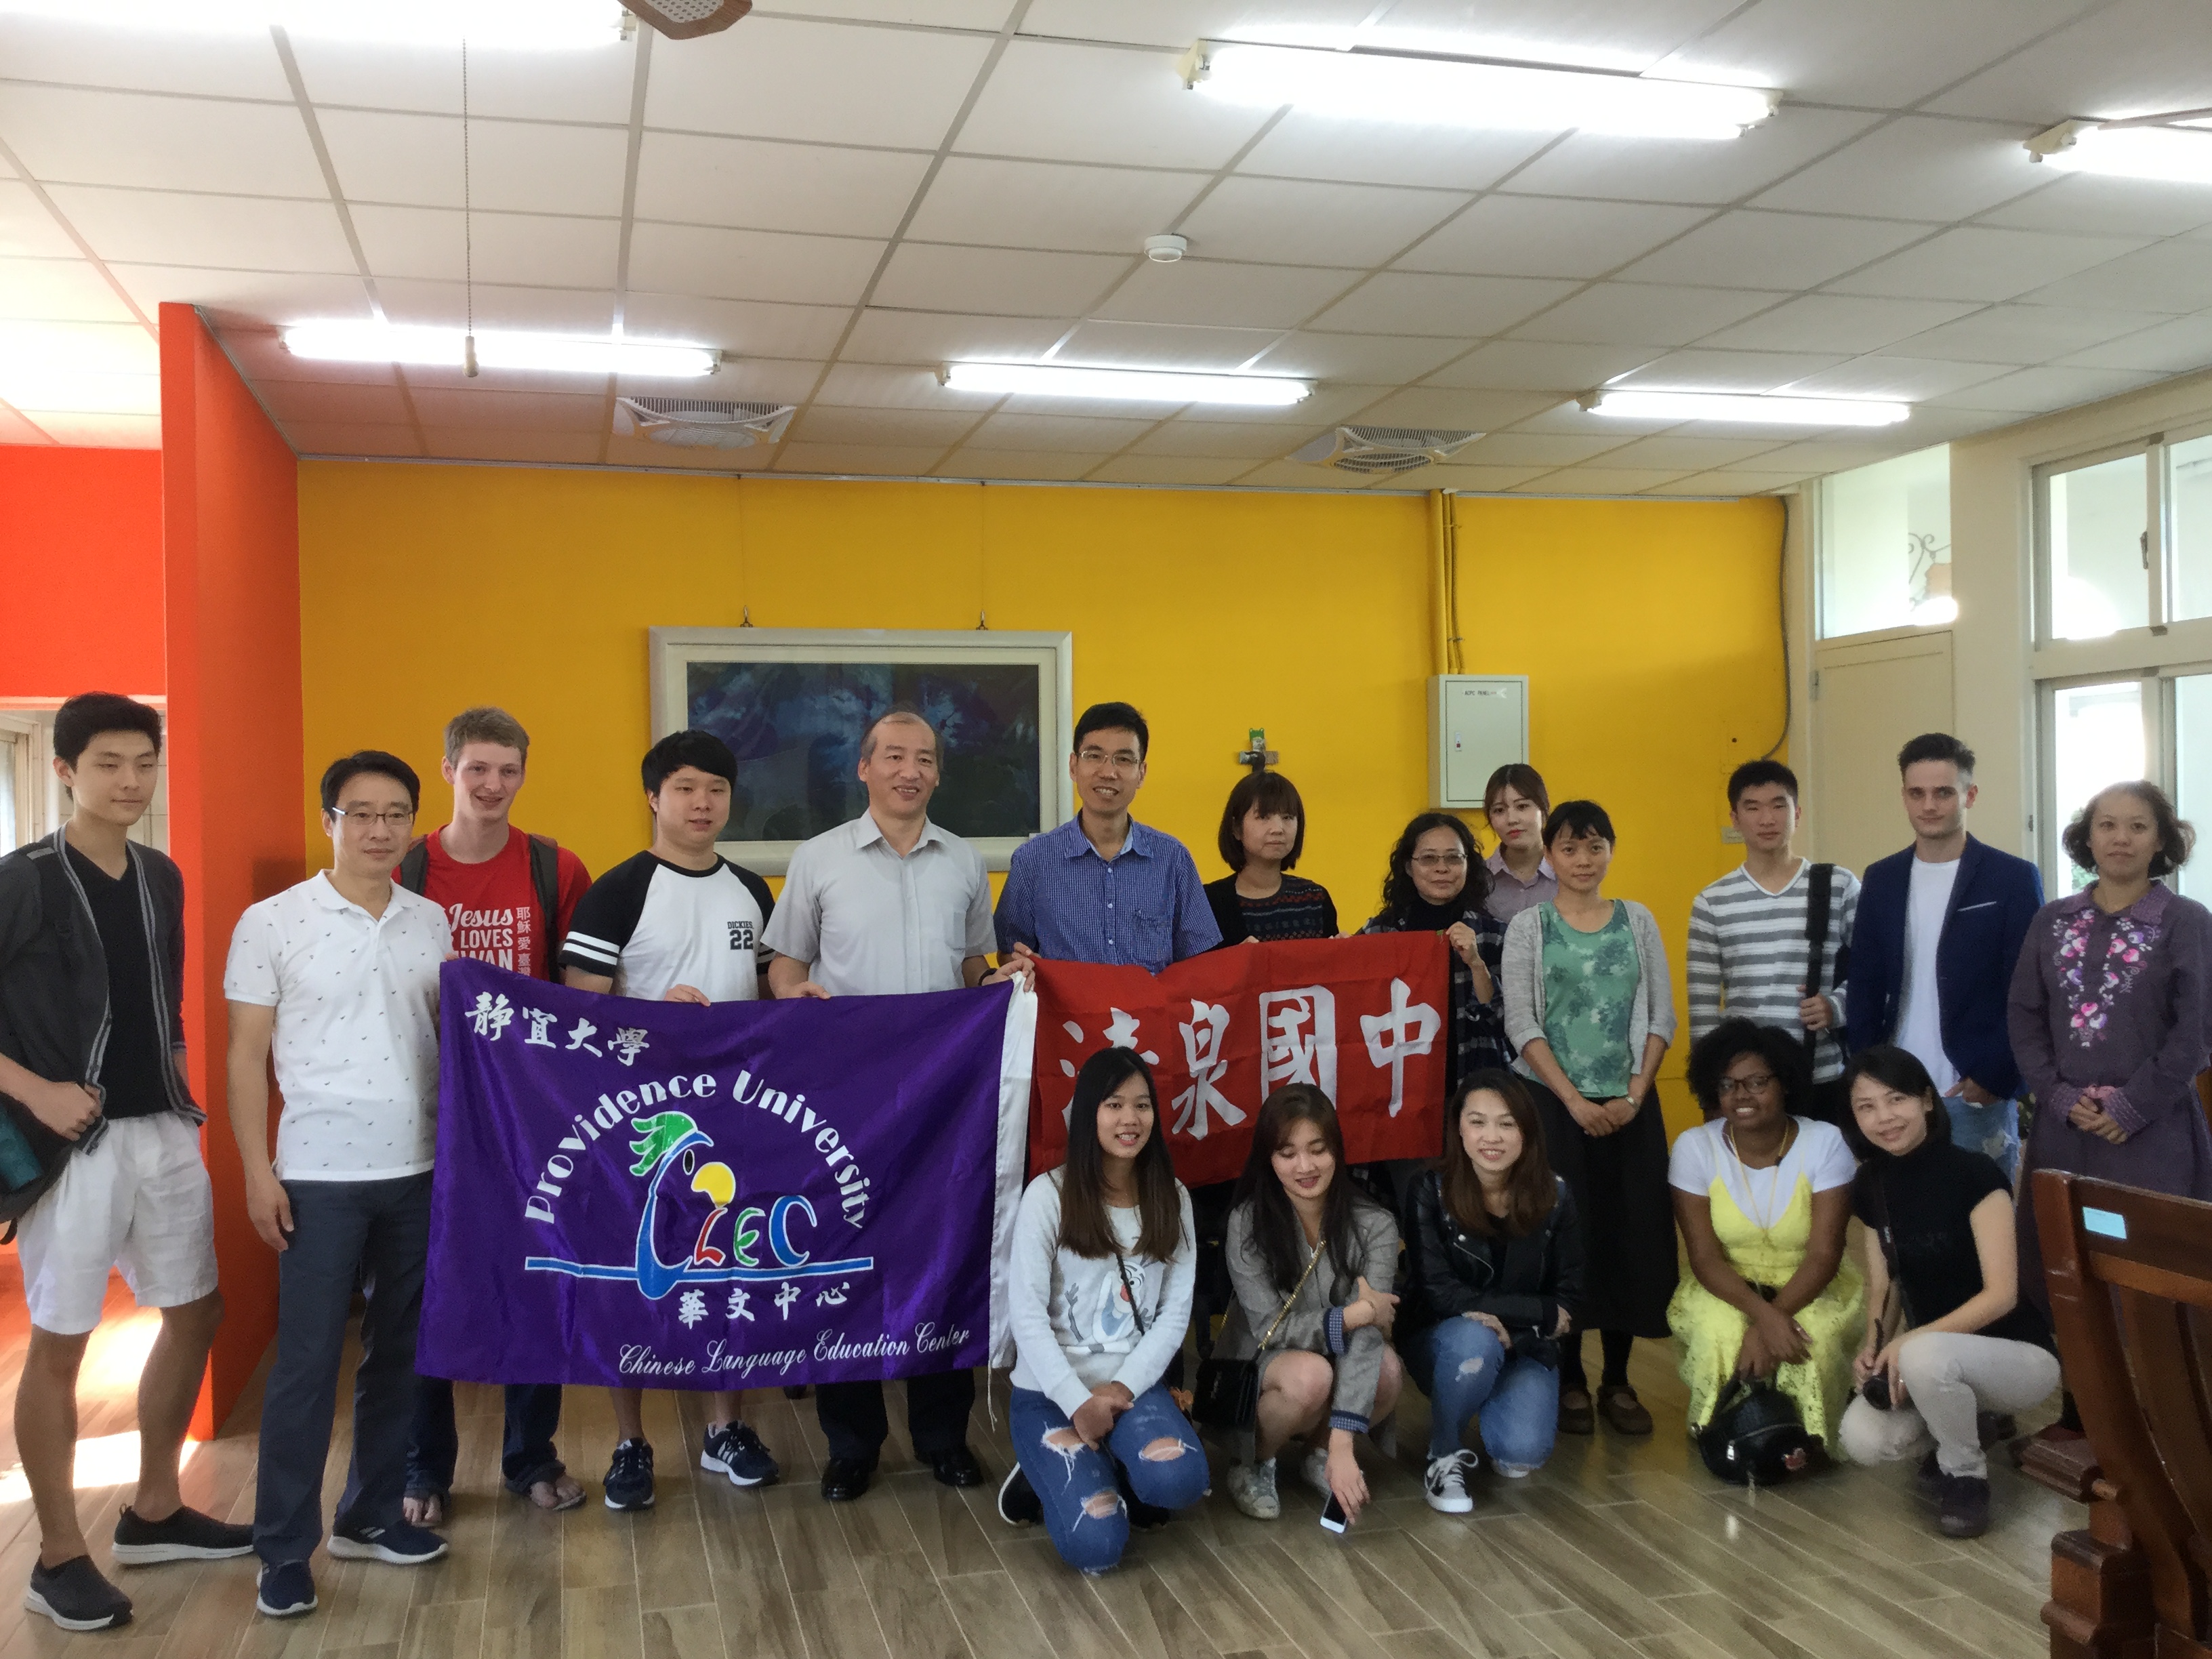 Foreign students visit Qingquan Junior High School